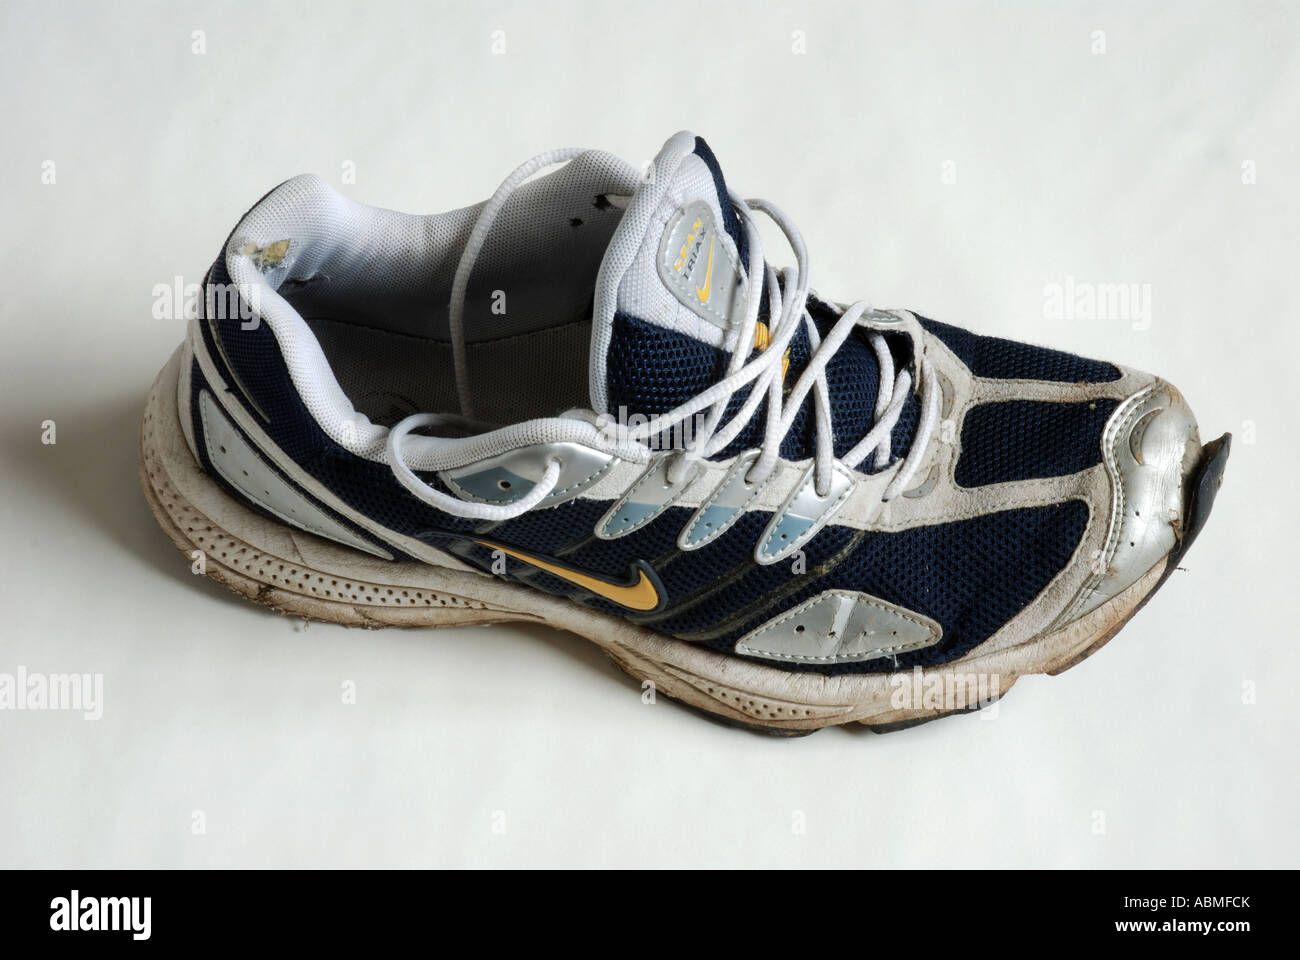 Un vecchio Nike Running Shoe Foto stock - Alamy